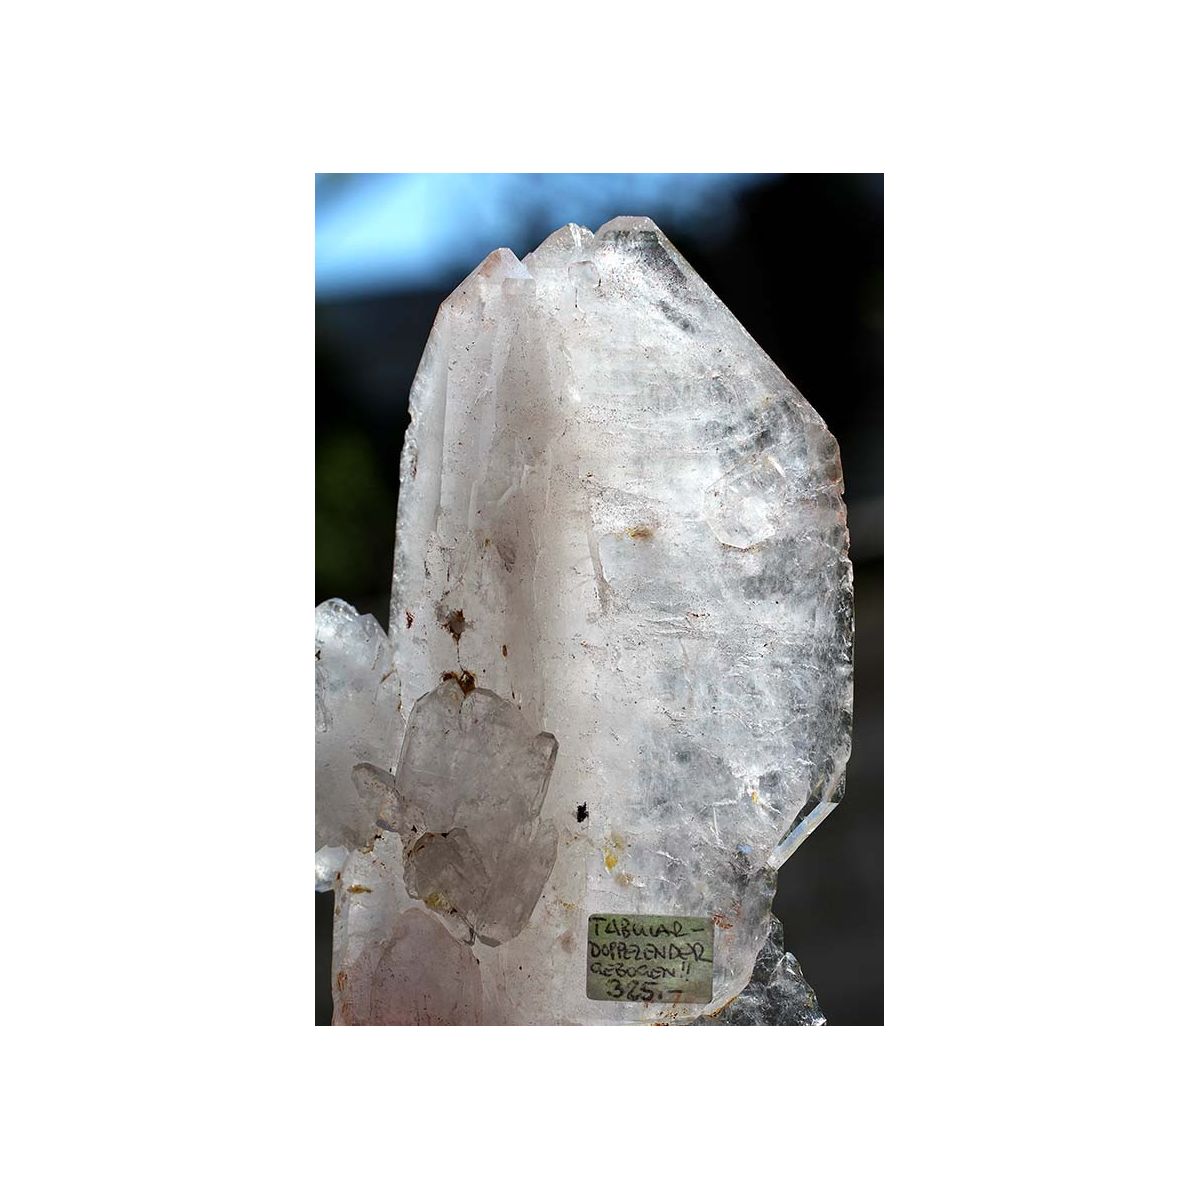 Fadenquarzaggregat - Tabular - mehrfach Doppelender, gebogen - Energie - Kristall (Göttliche Energien)